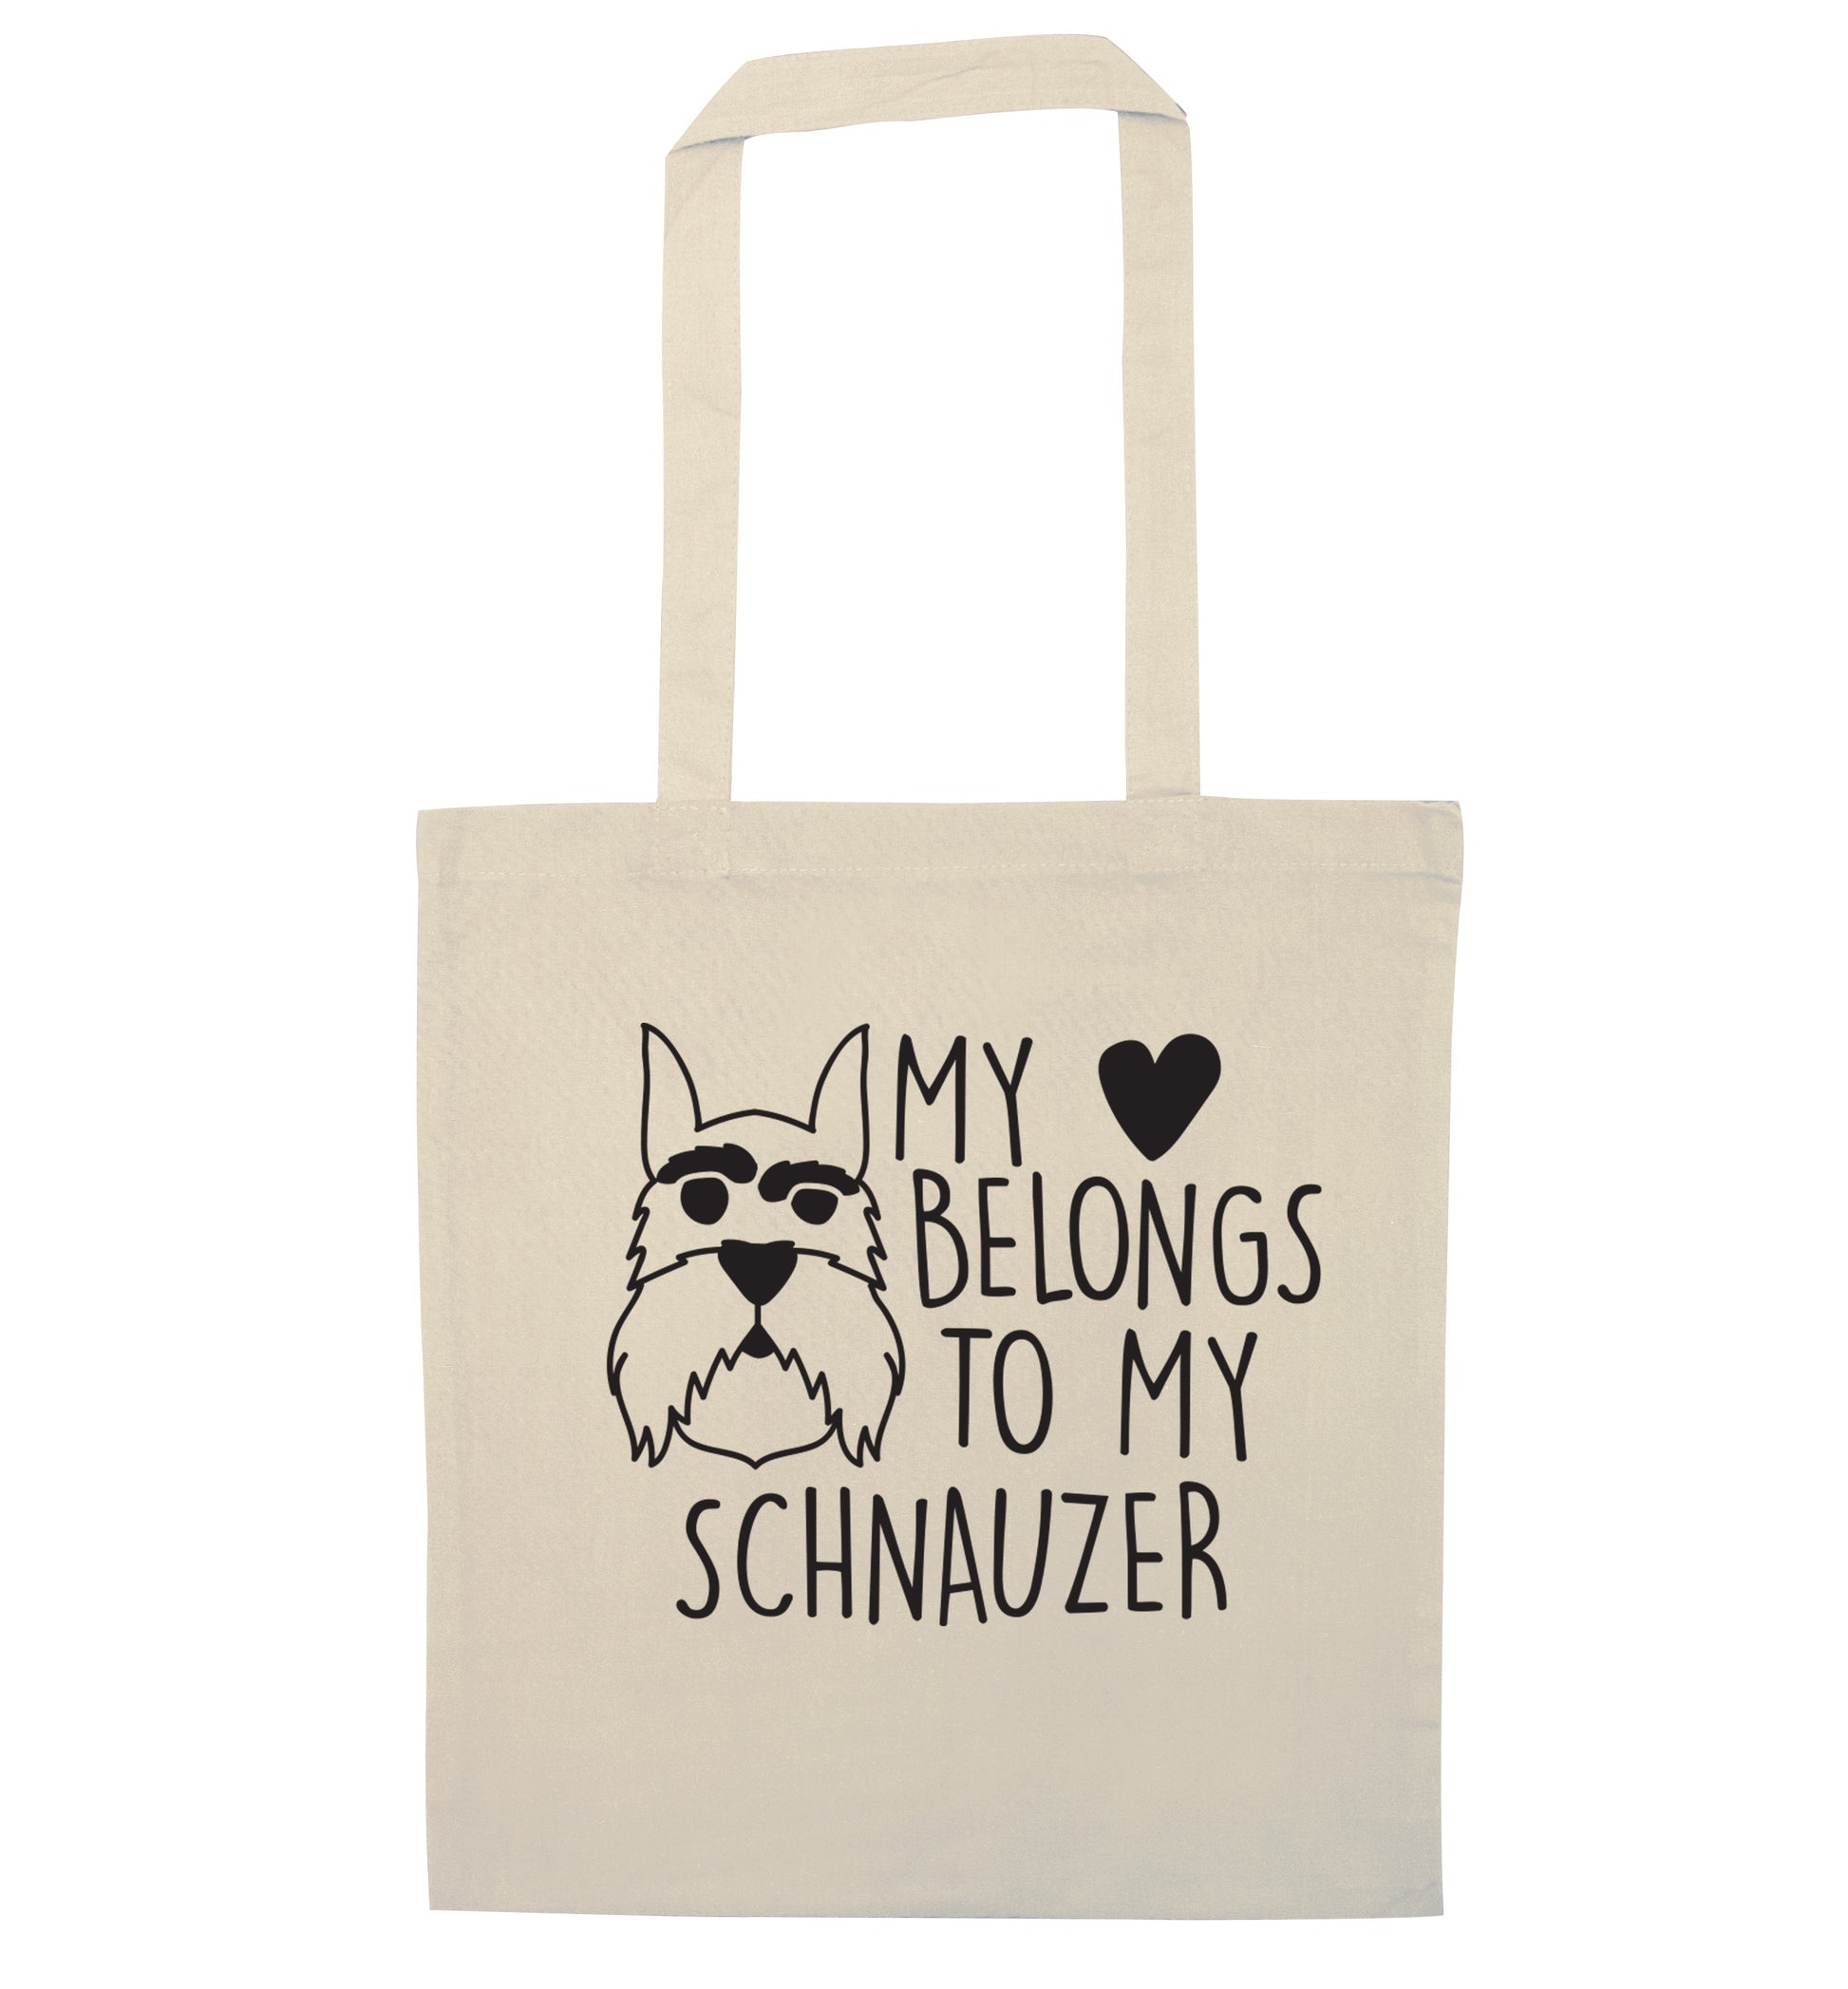 My heart belongs to my schnauzer natural tote bag